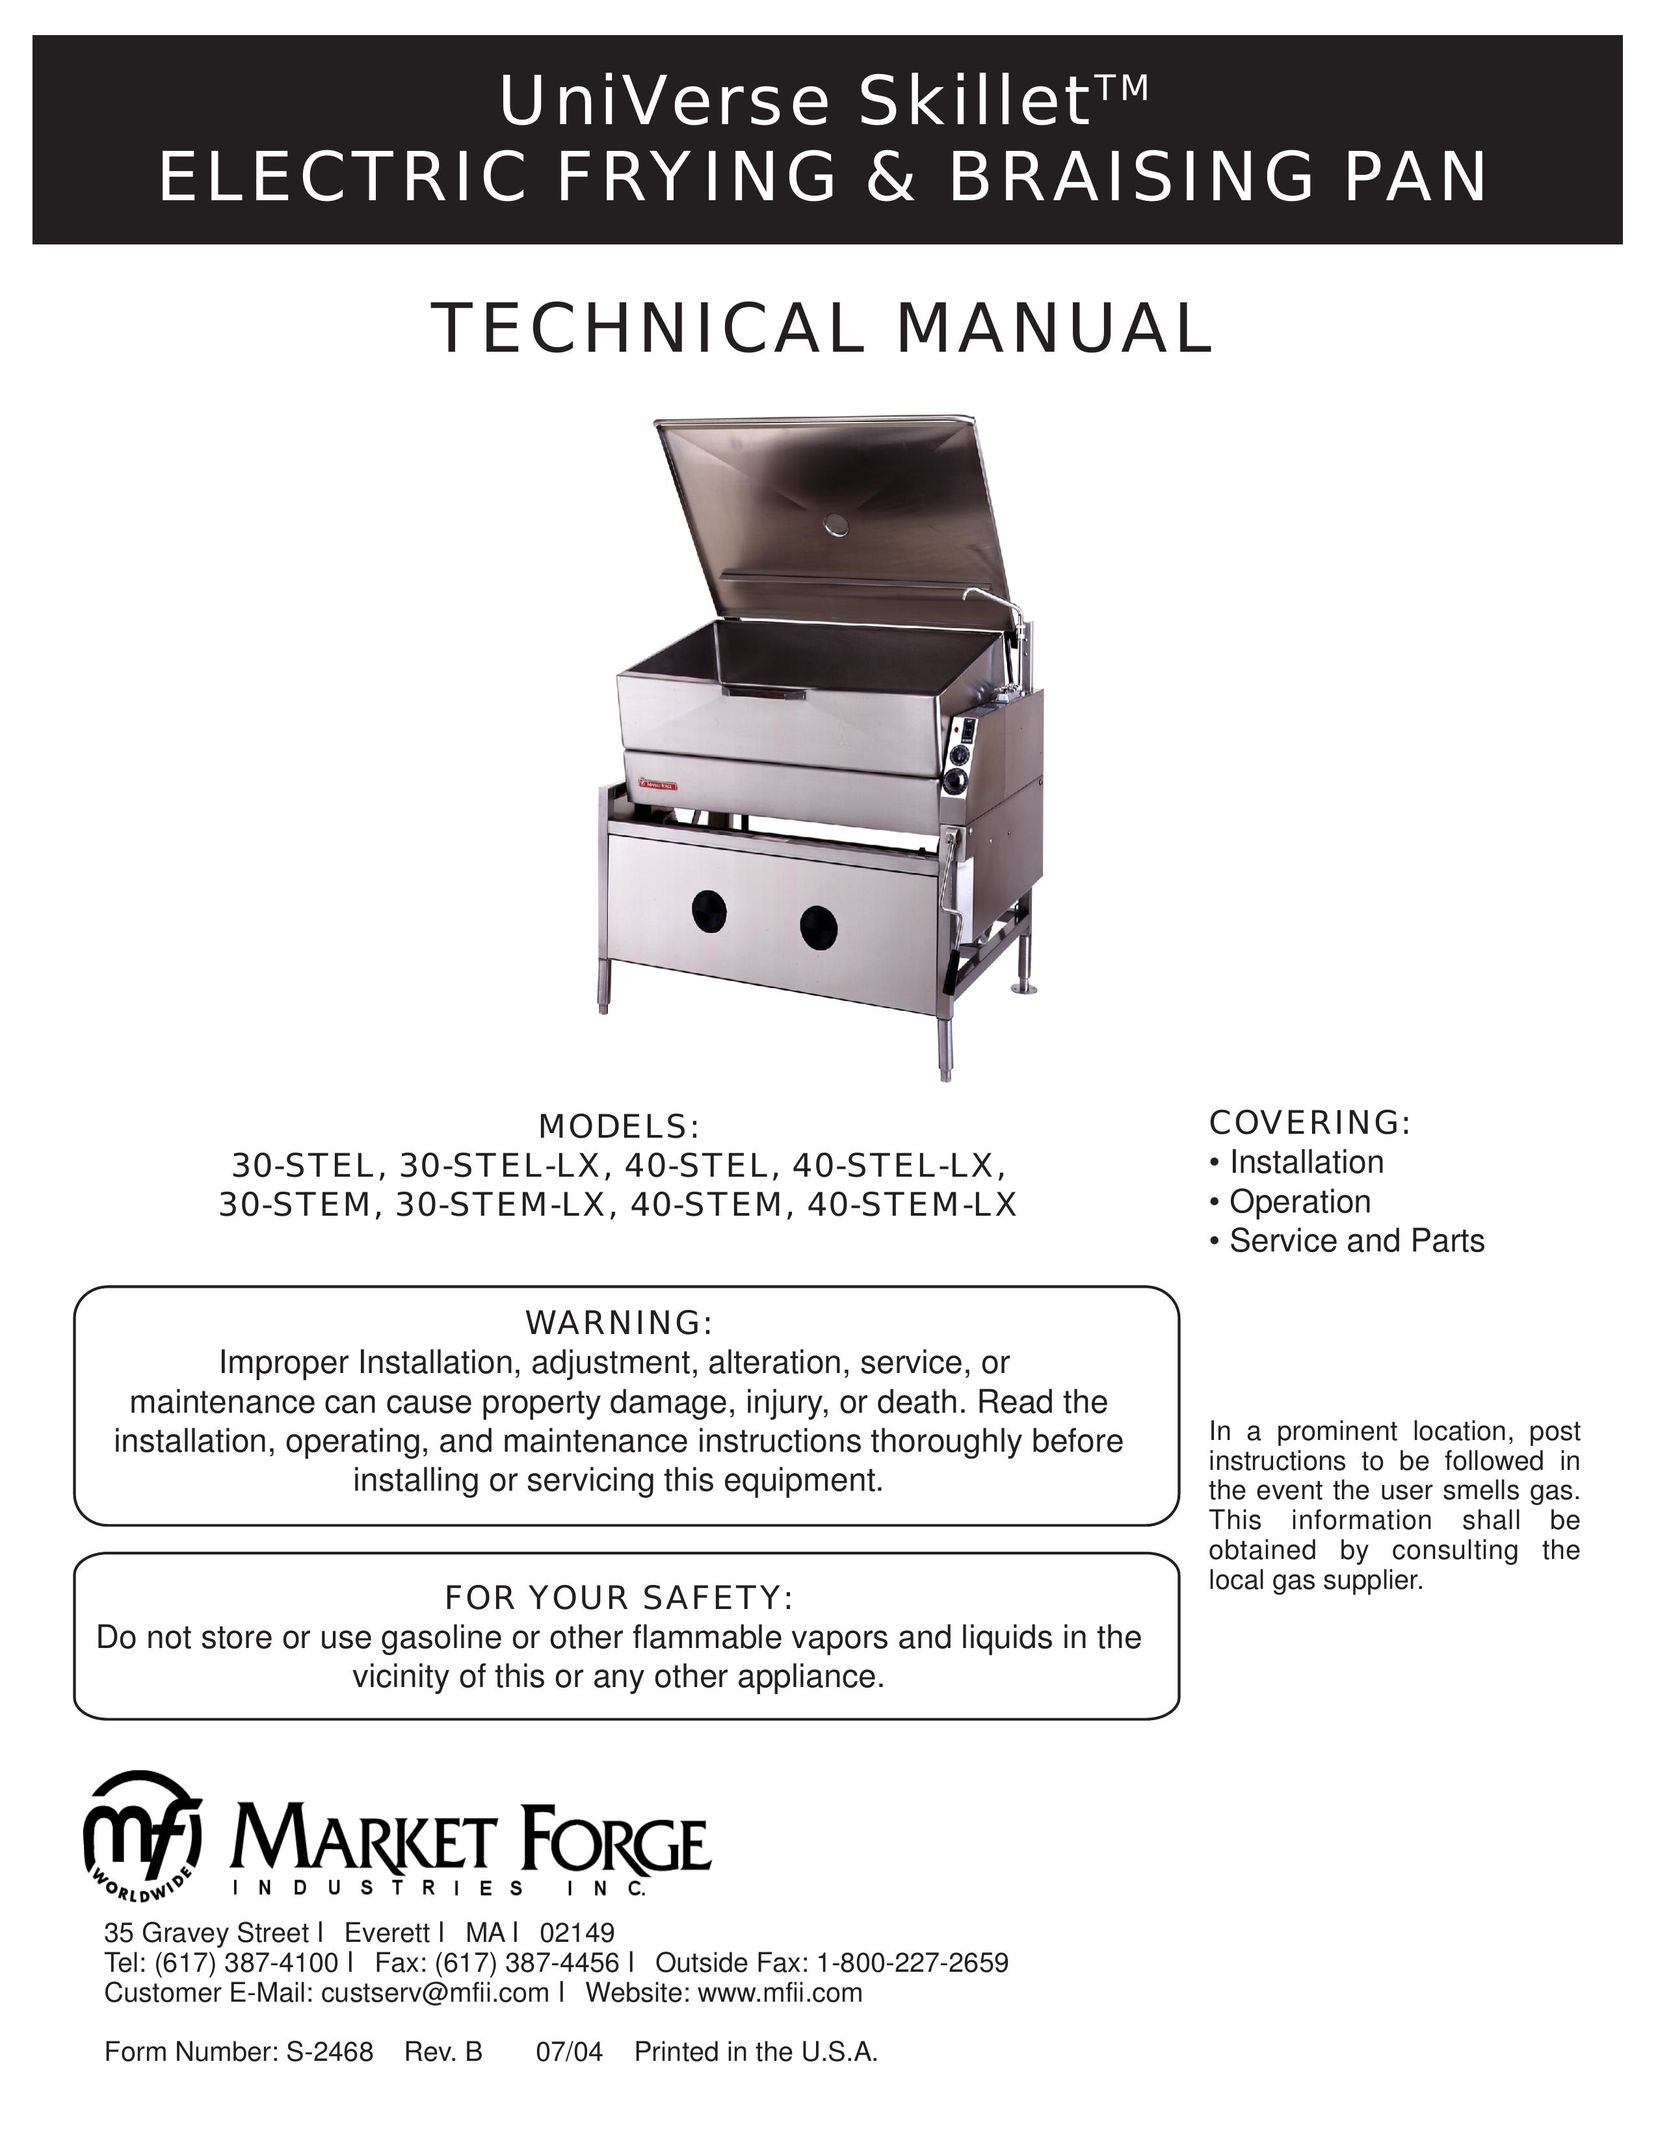 Market Forge Industries 30-stel Fryer User Manual